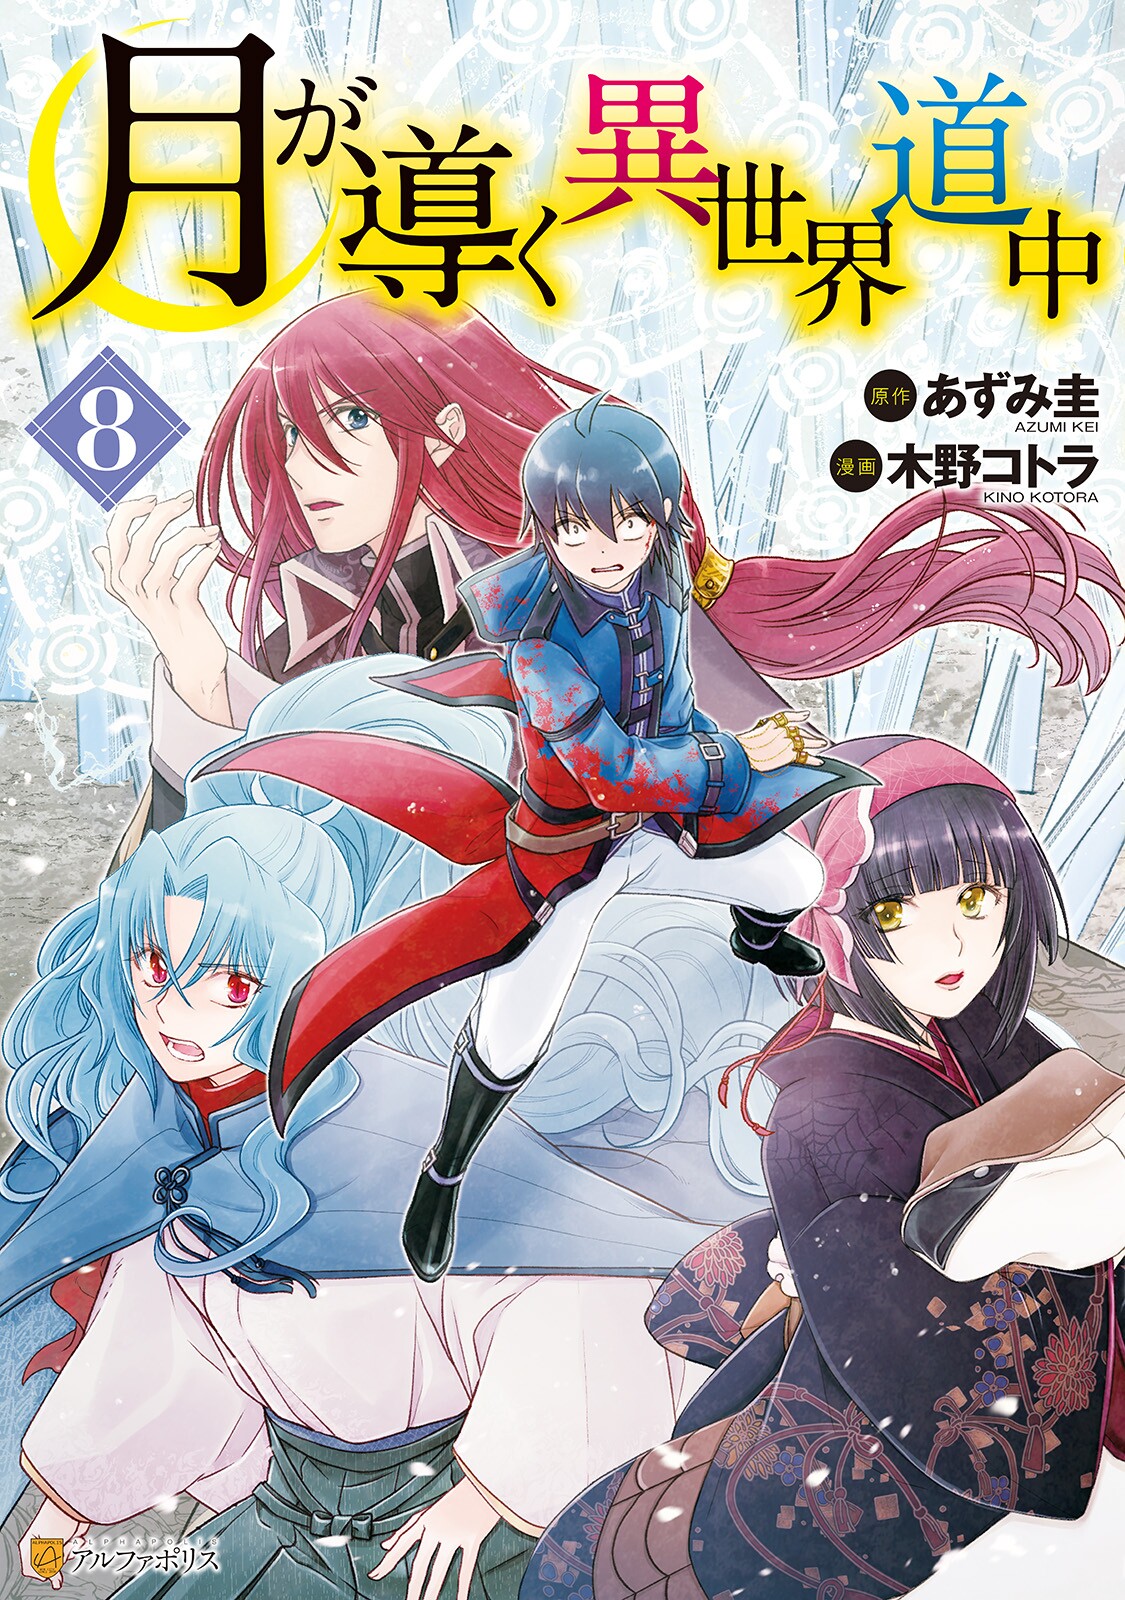 Characters appearing in Tsukimichi Moonlit Fantasy Manga  AnimePlanet